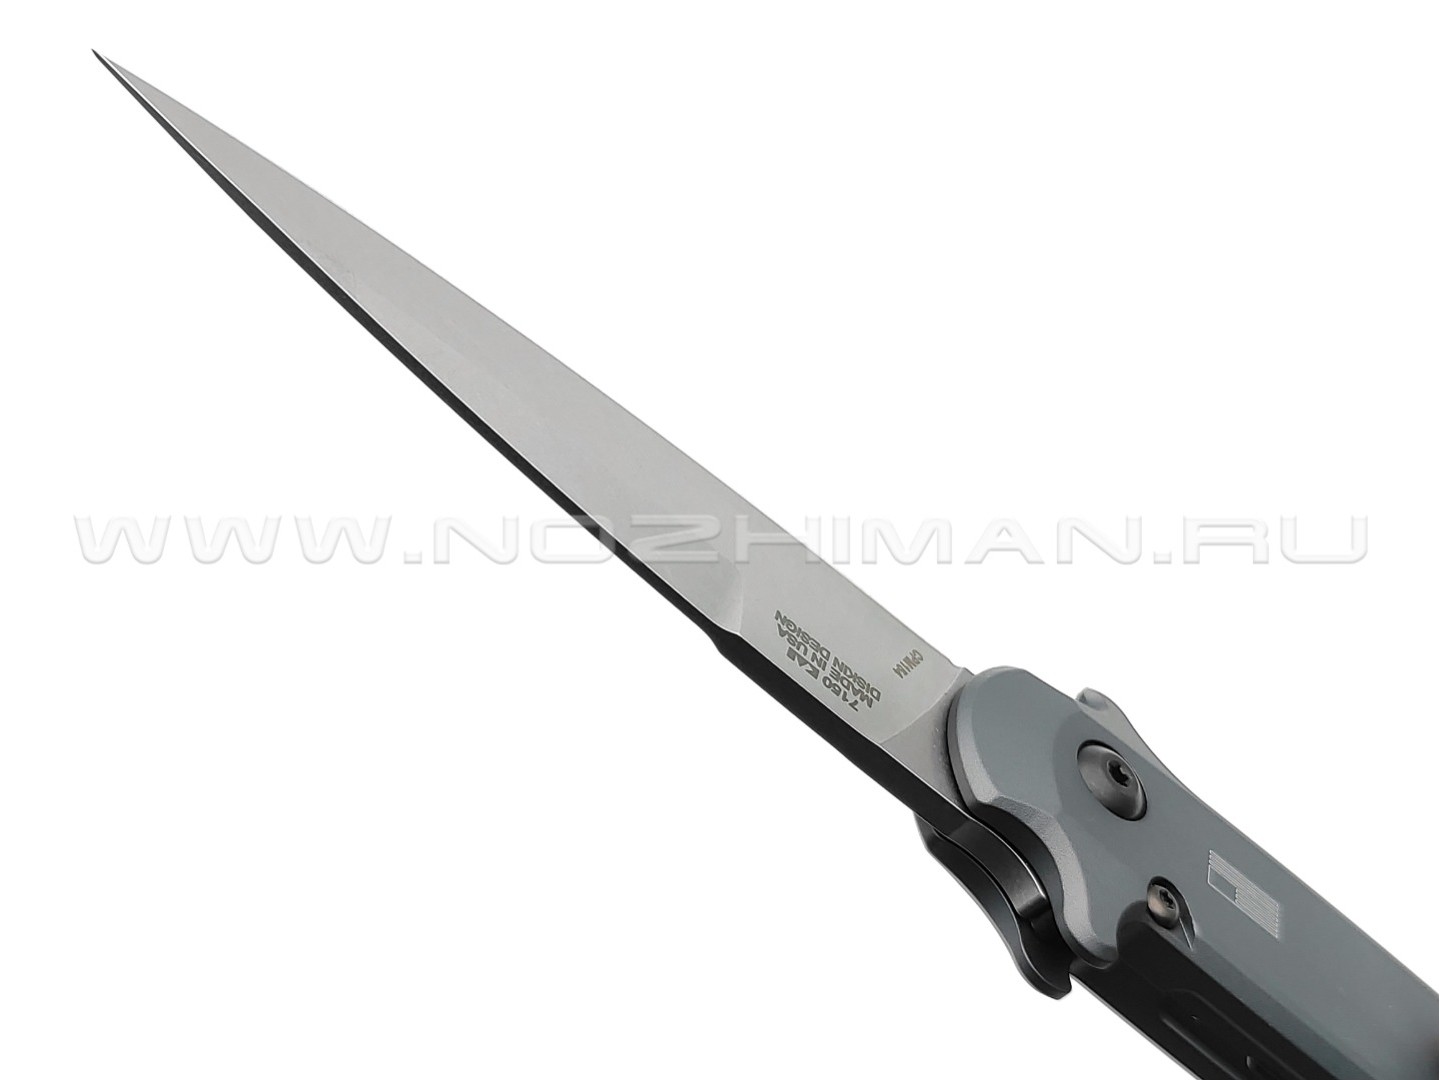 Нож Kershaw 7150 Launch 8 сталь CPM 154 stonewash, рукоять Aluminium 6061 T-6/Carbone